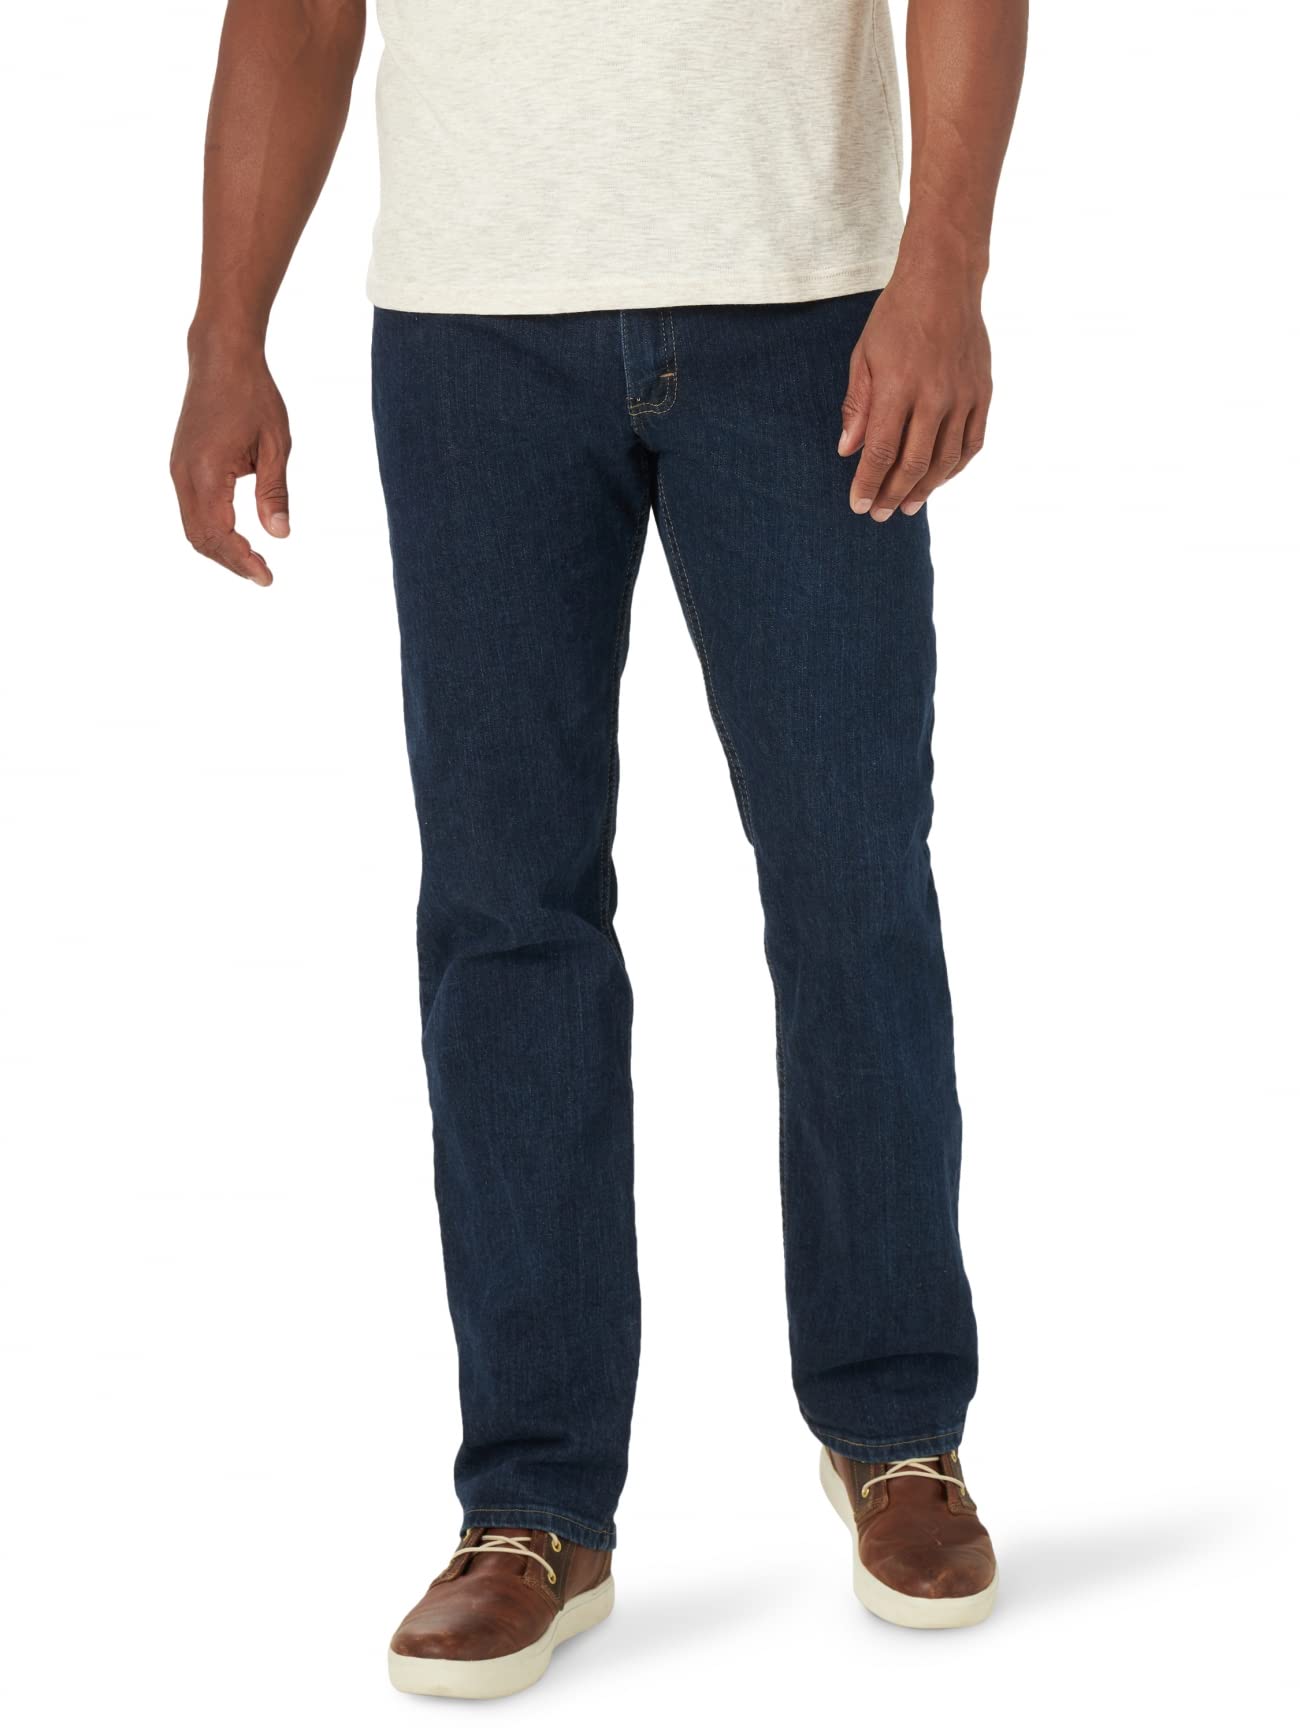 Wrangler Authentics Men's Regular Fit Comfort Flex Waist Jean, Dark Indigo, 38W x 29L